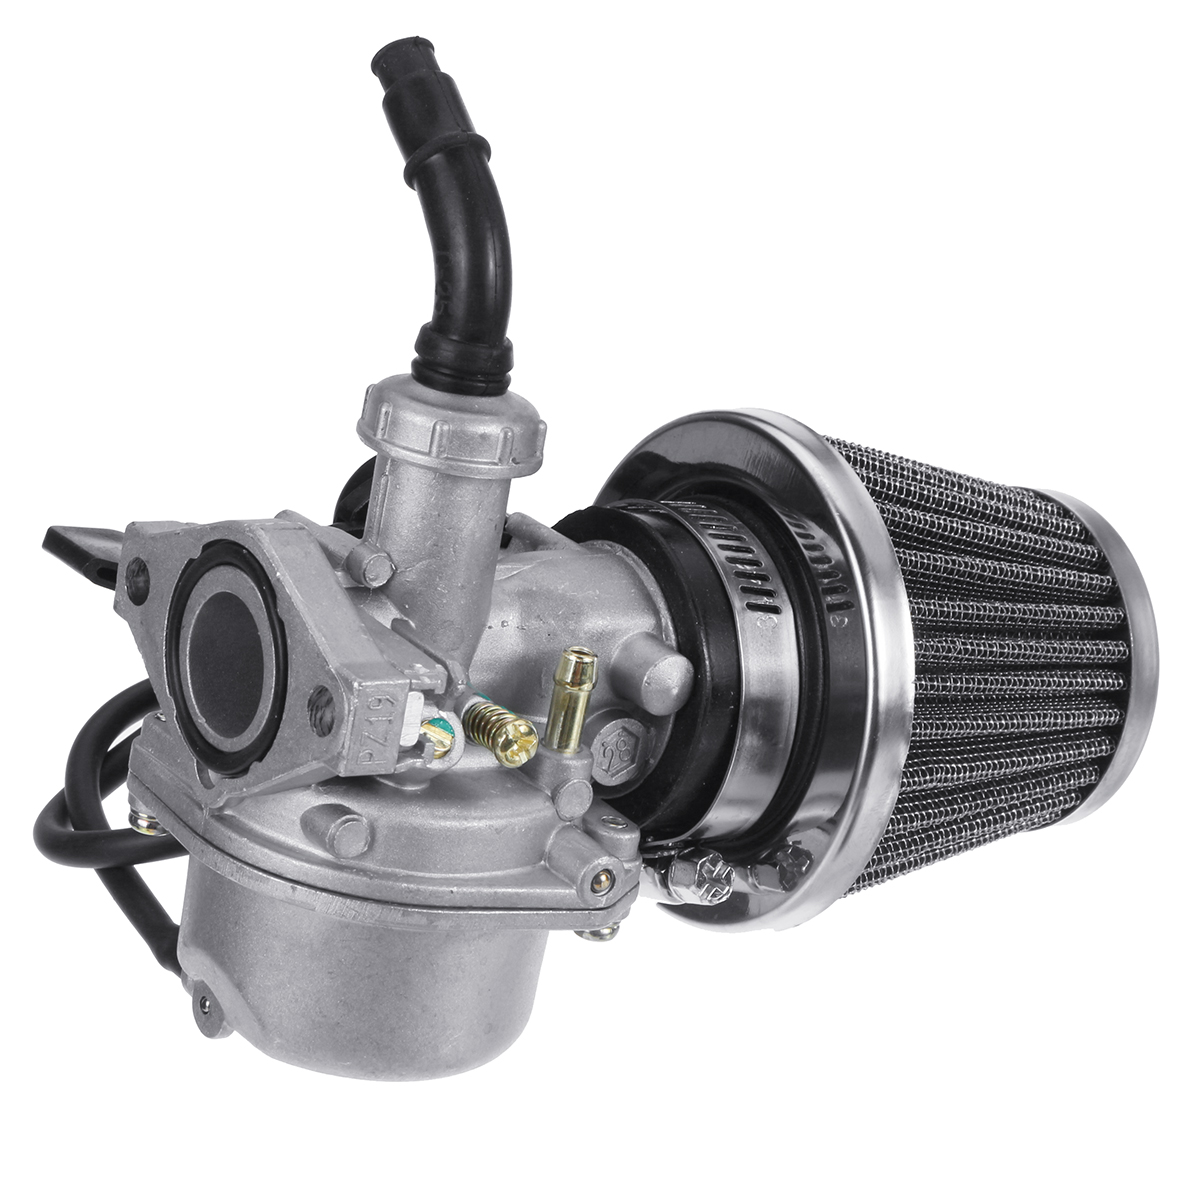 50Cc 70Cc 90Cc 110Cc 125Cc Carb Carburetor with Air Filter Intake Pipe Gasket for Mini Motor ATV Quad